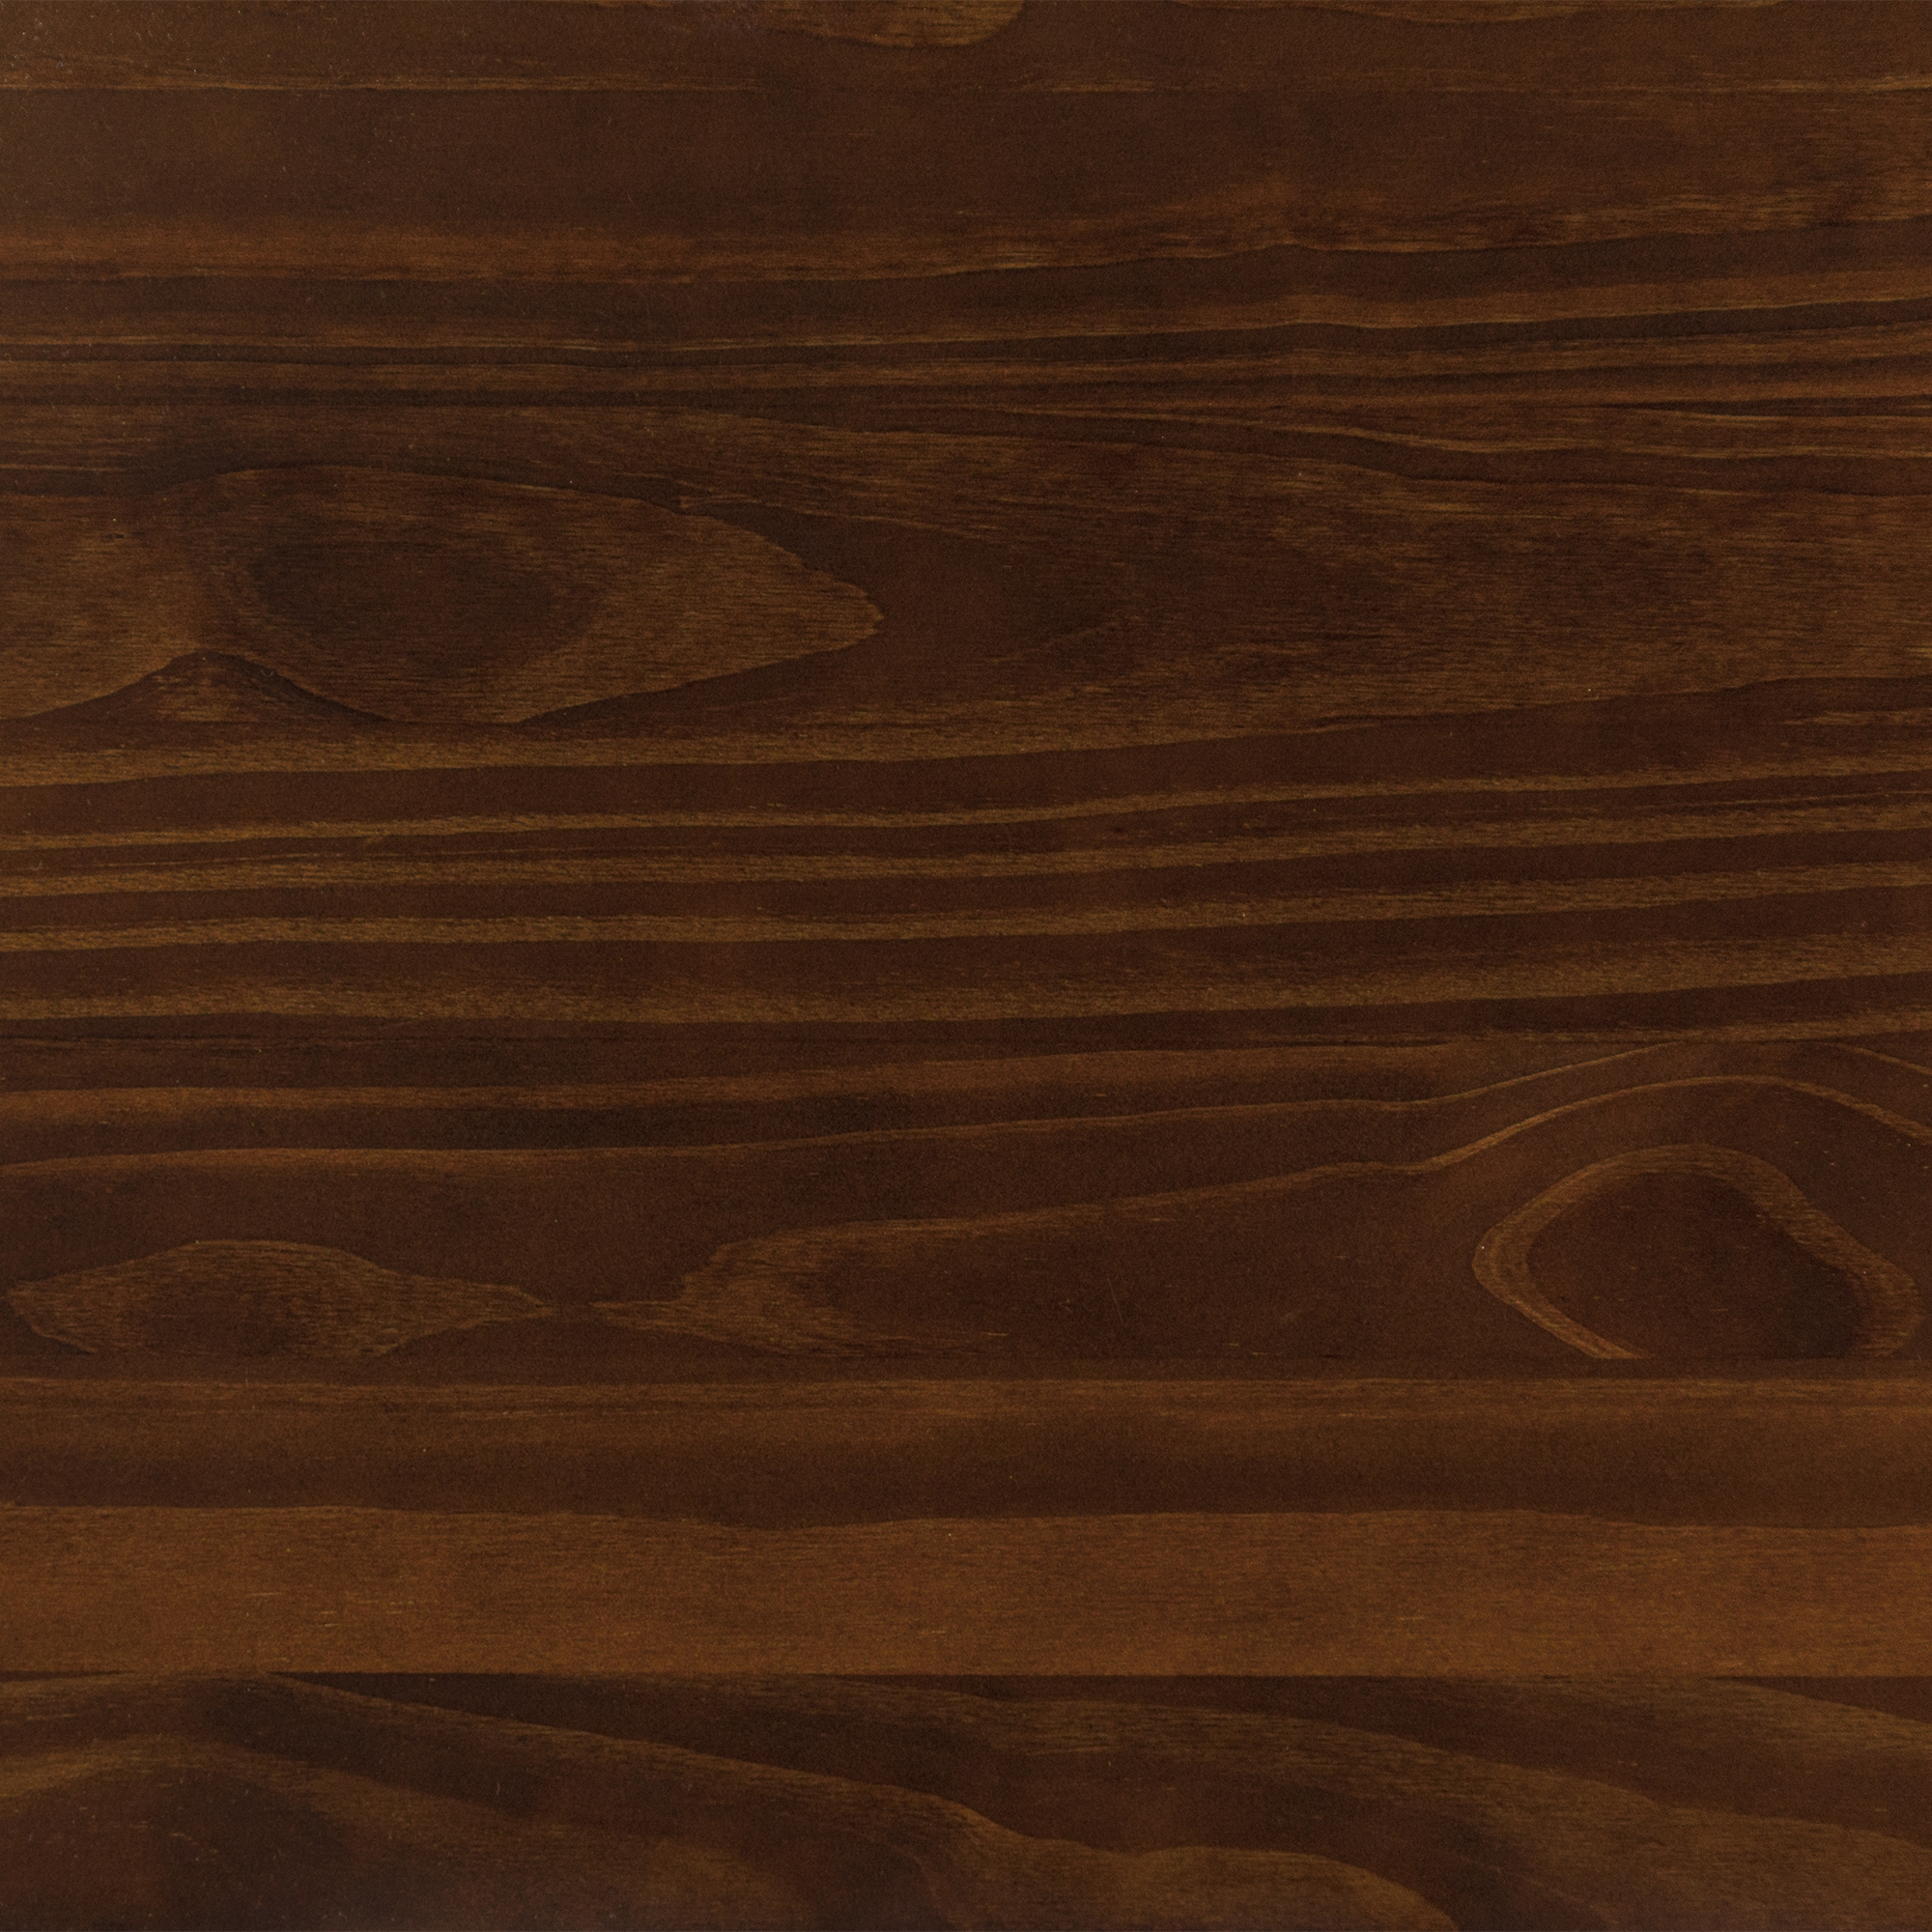 King Mid Century Modern Solid Wood Platform Bed - Walnut - Image 5